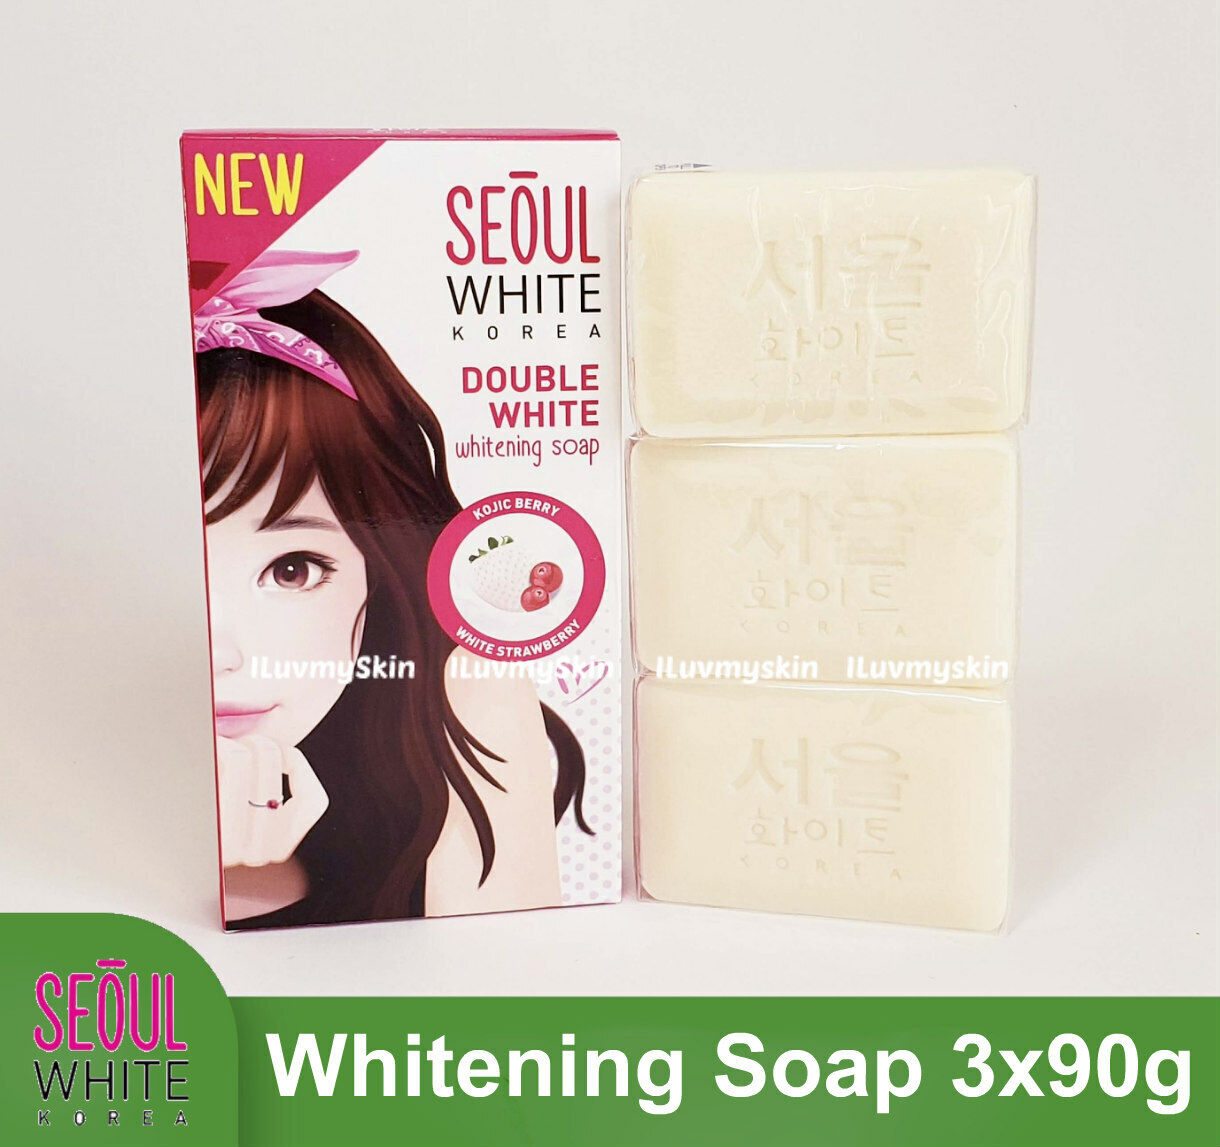 Seoul White Korea Double White Whitening Soap (Triple Pack)